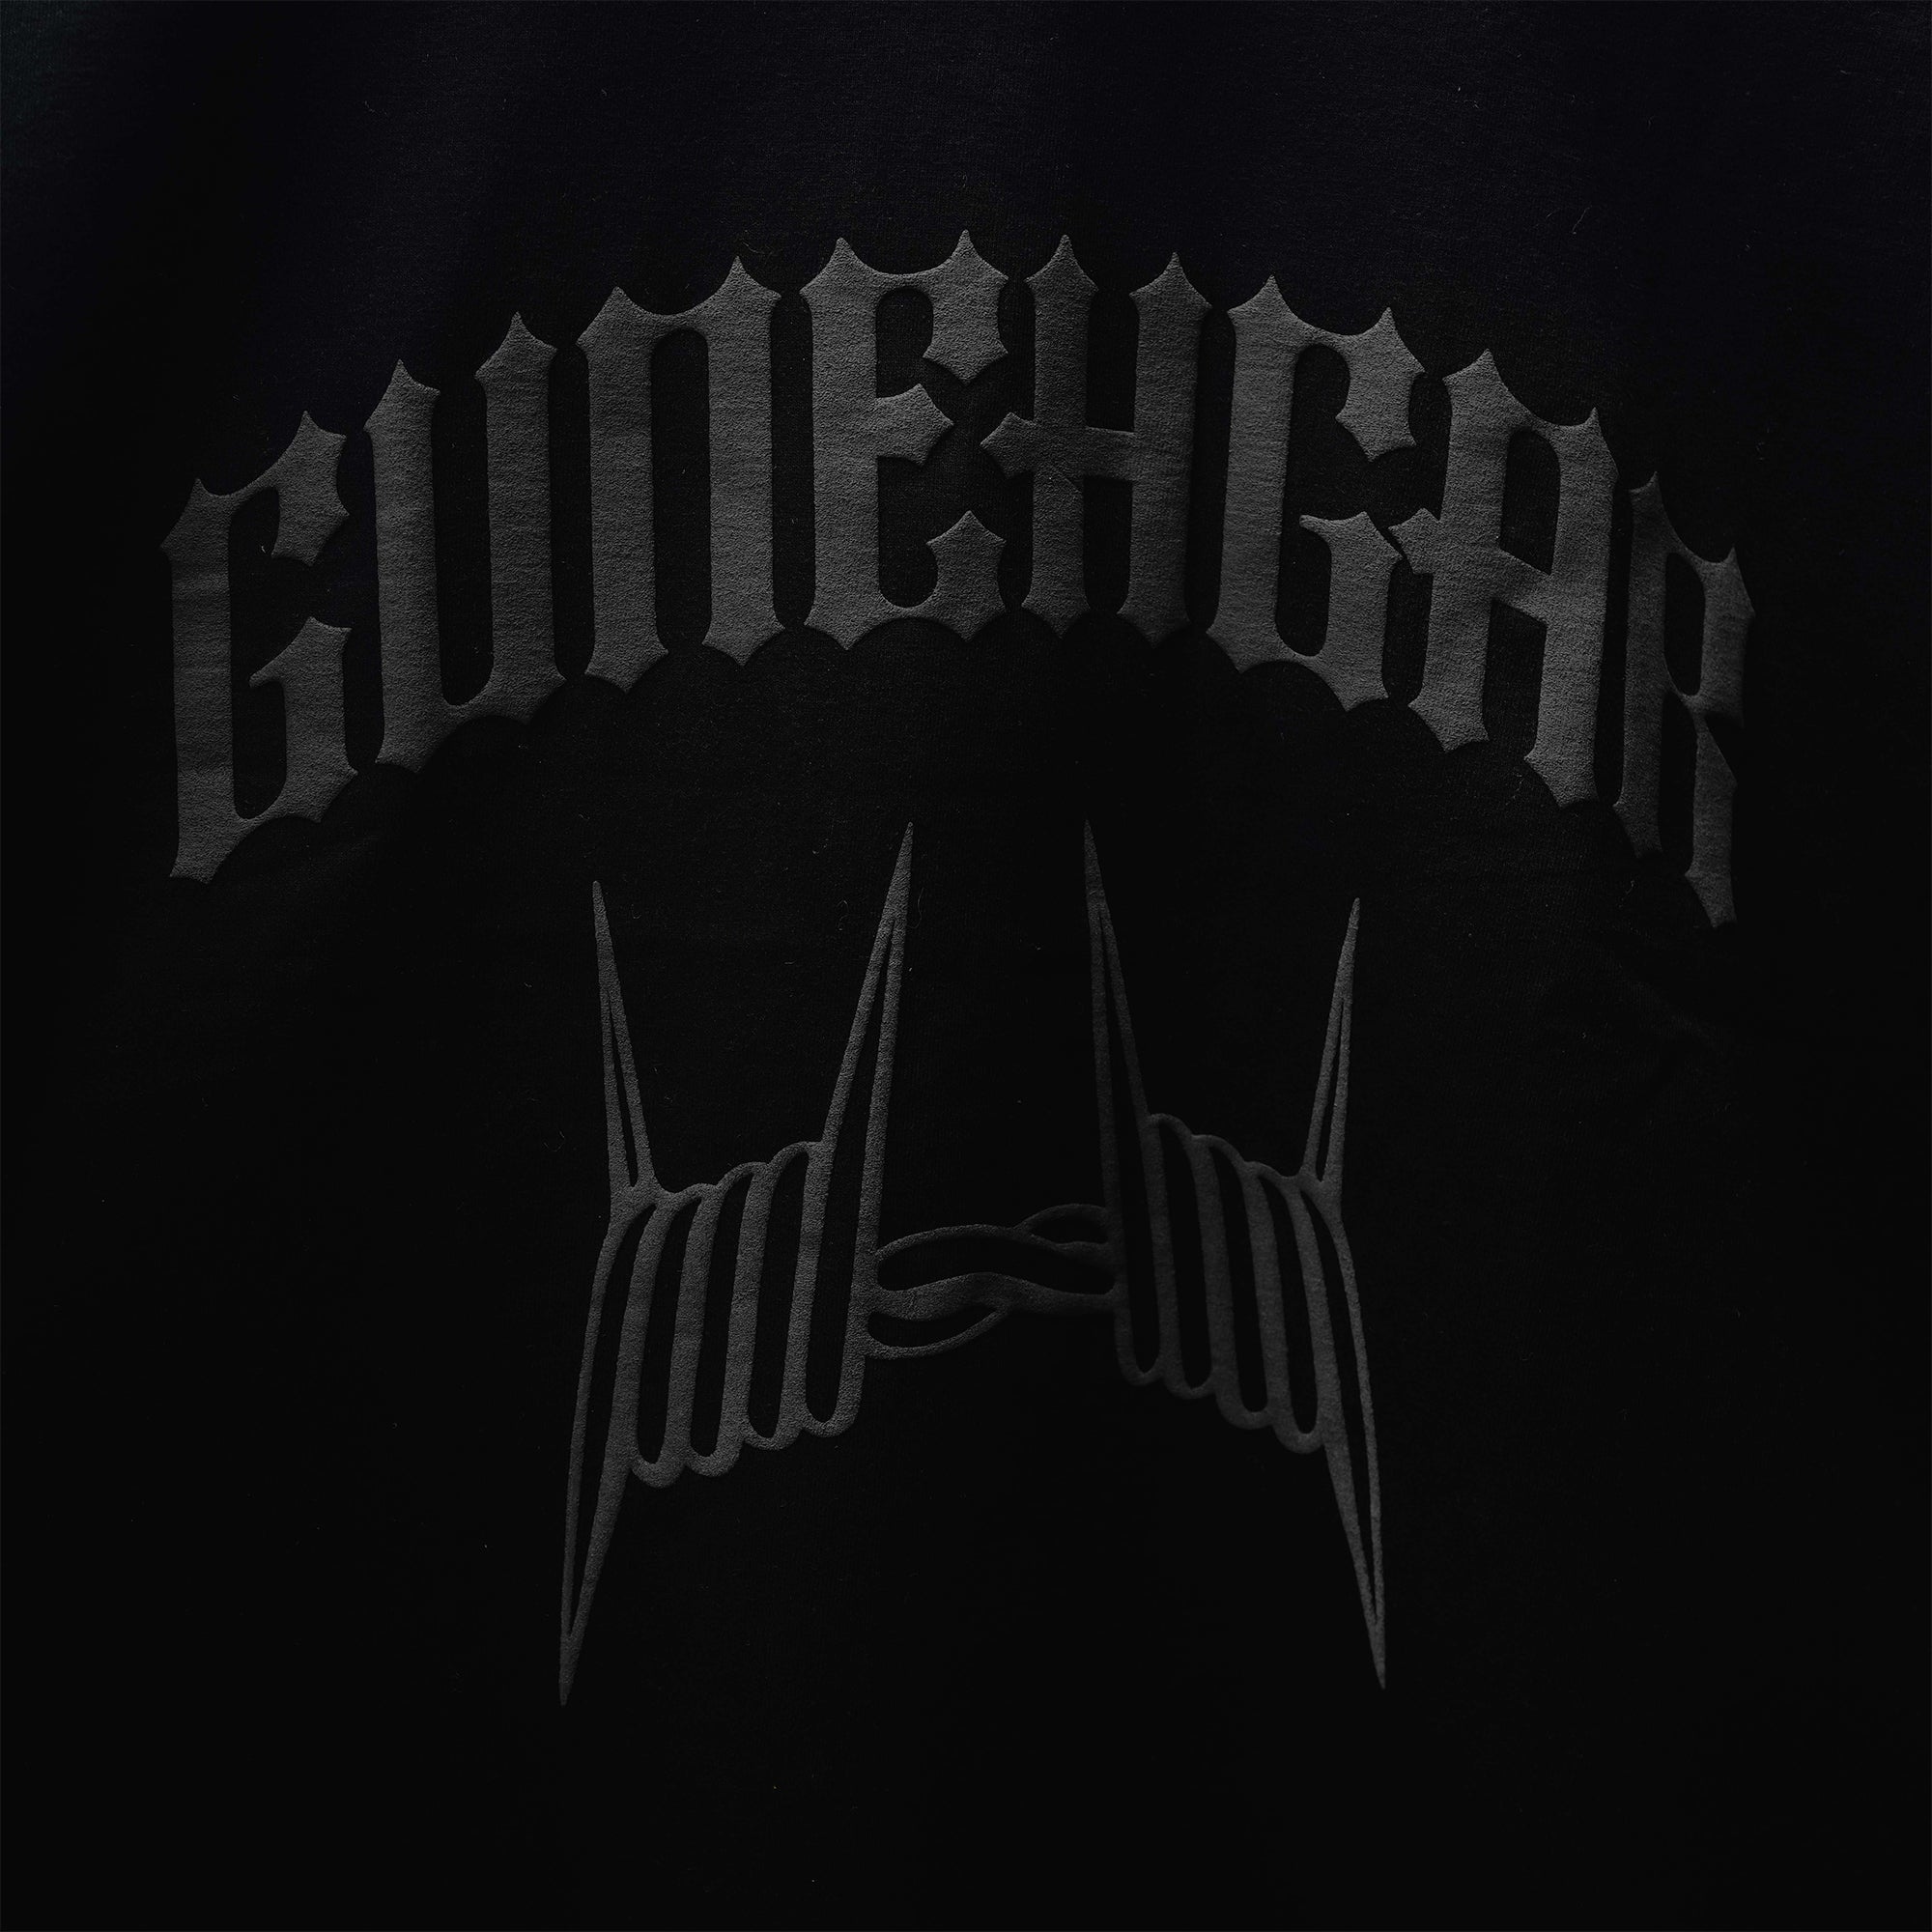 DIVINE Guneghar T-shirt - Grey